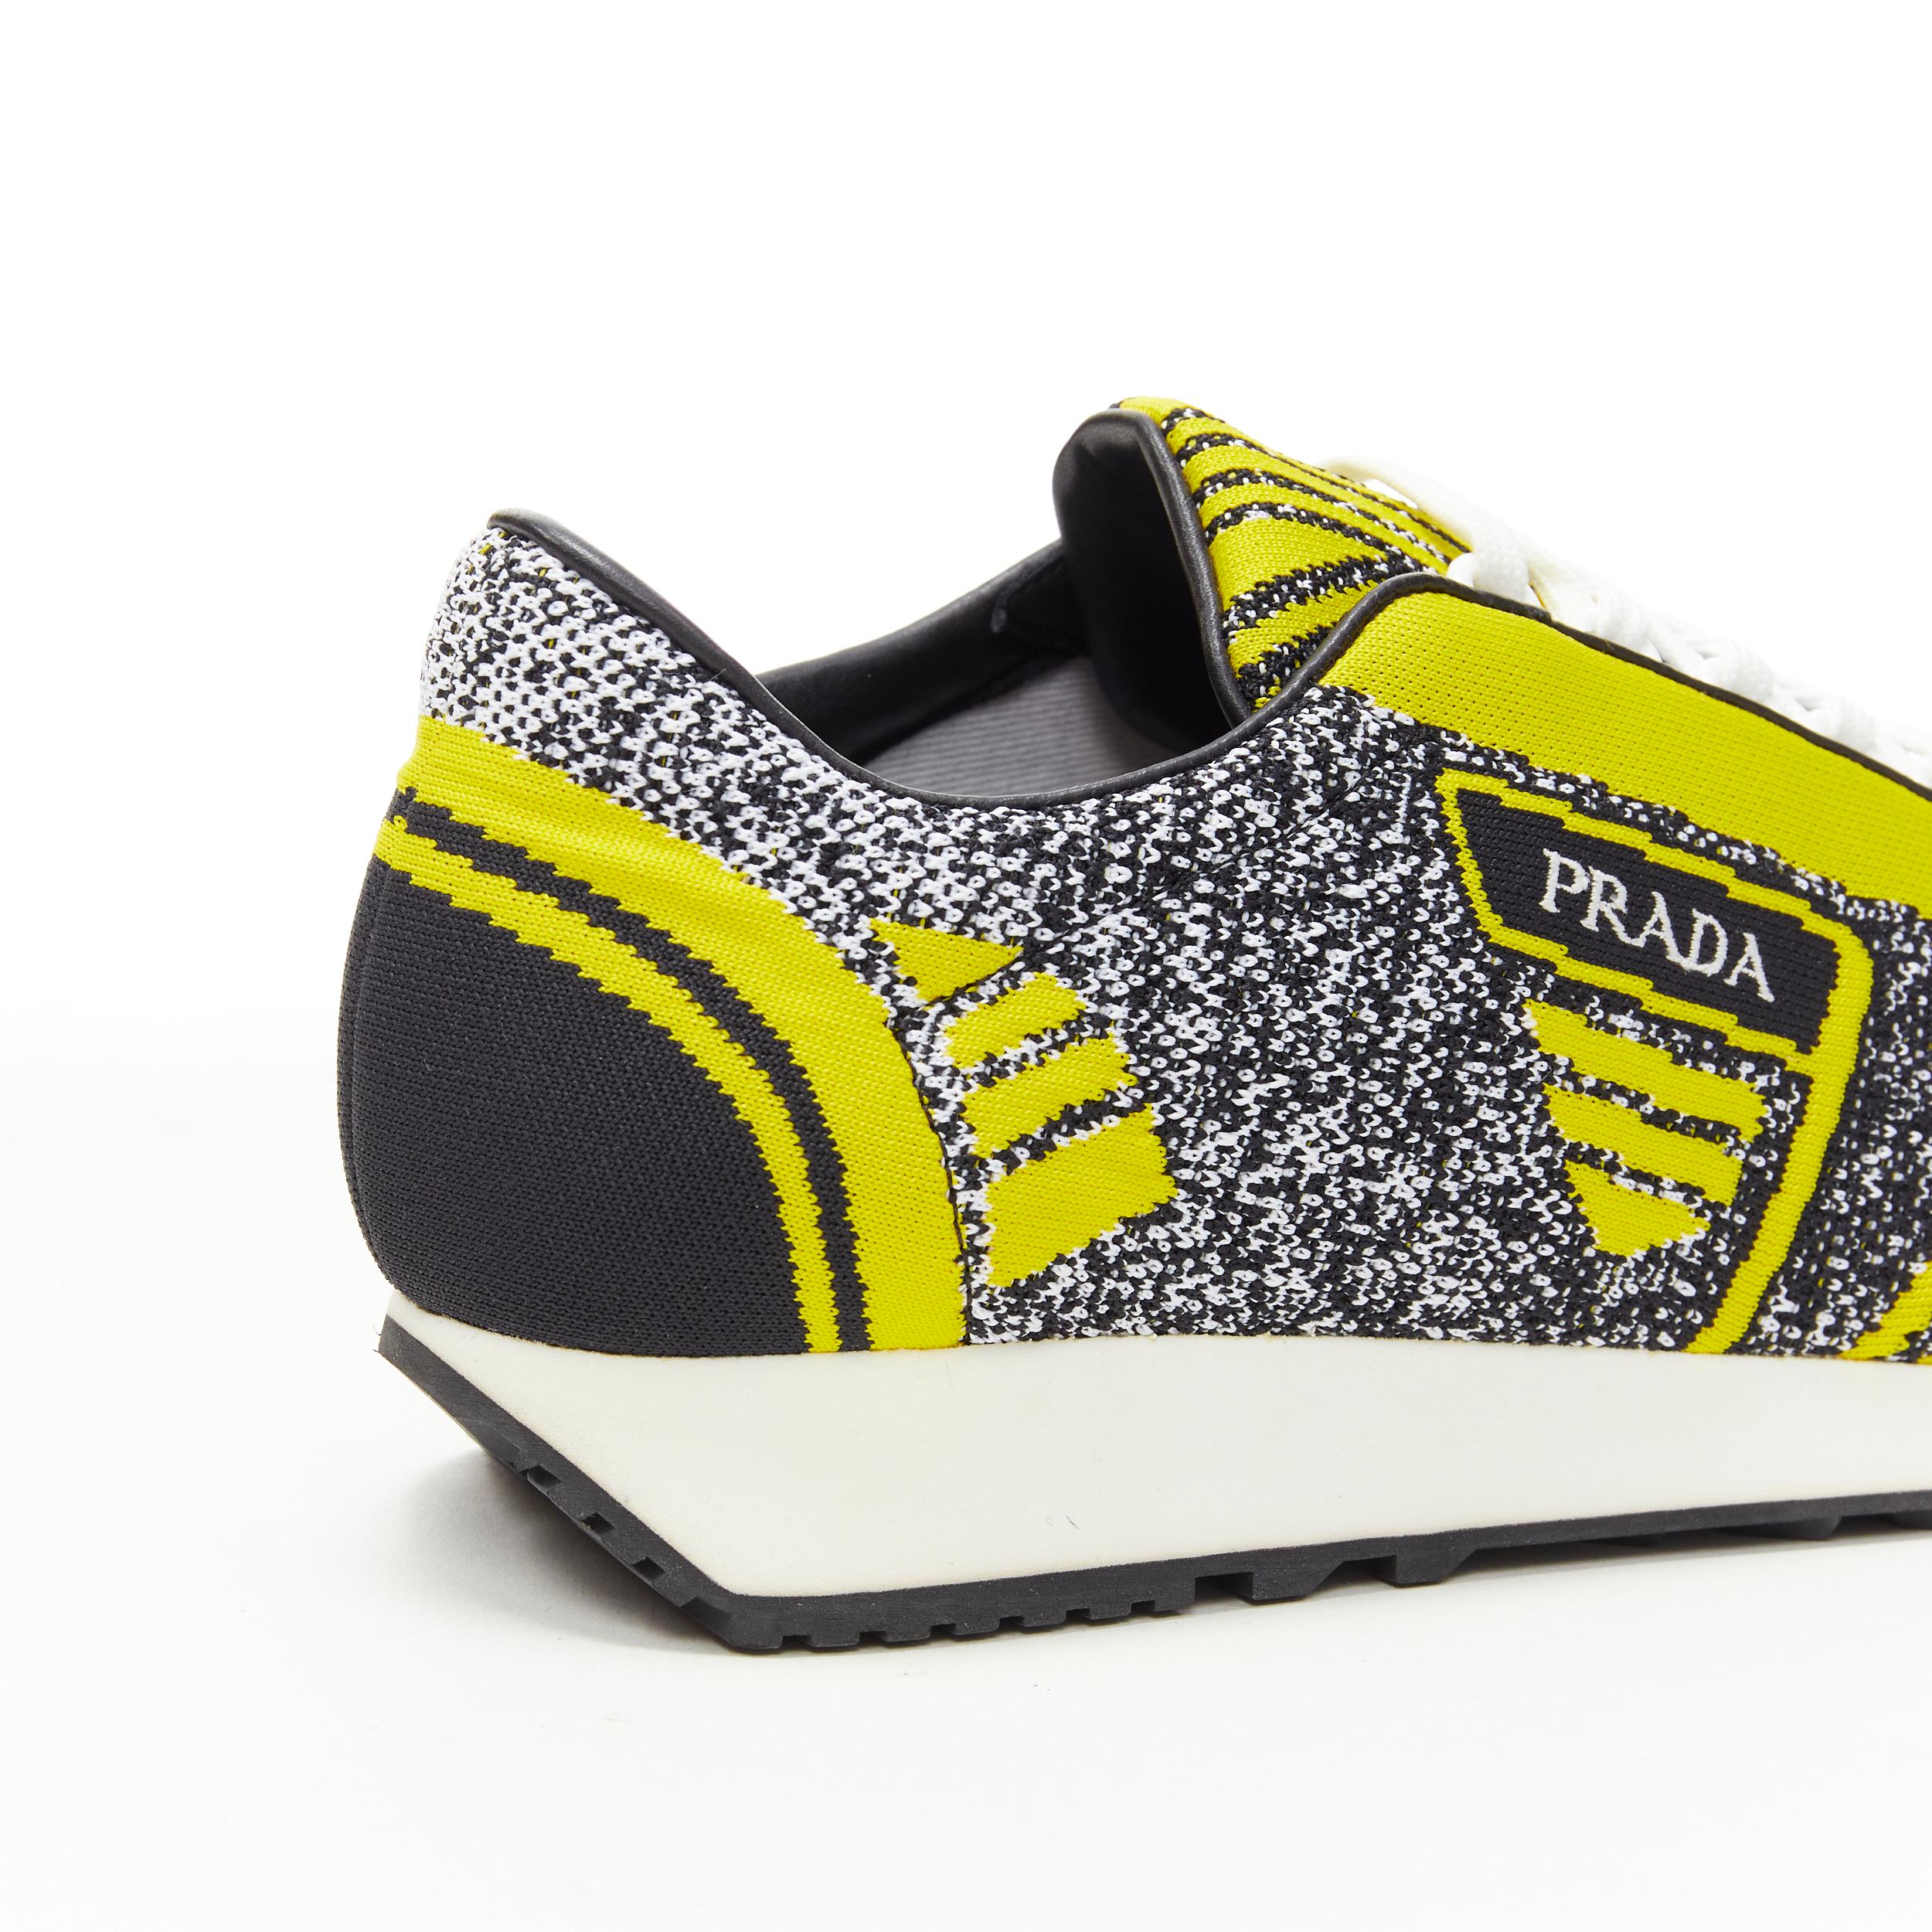 new PRADA Sport Knit yellow black logo sock knit low top sneakers UK8.5 EU42.5 2